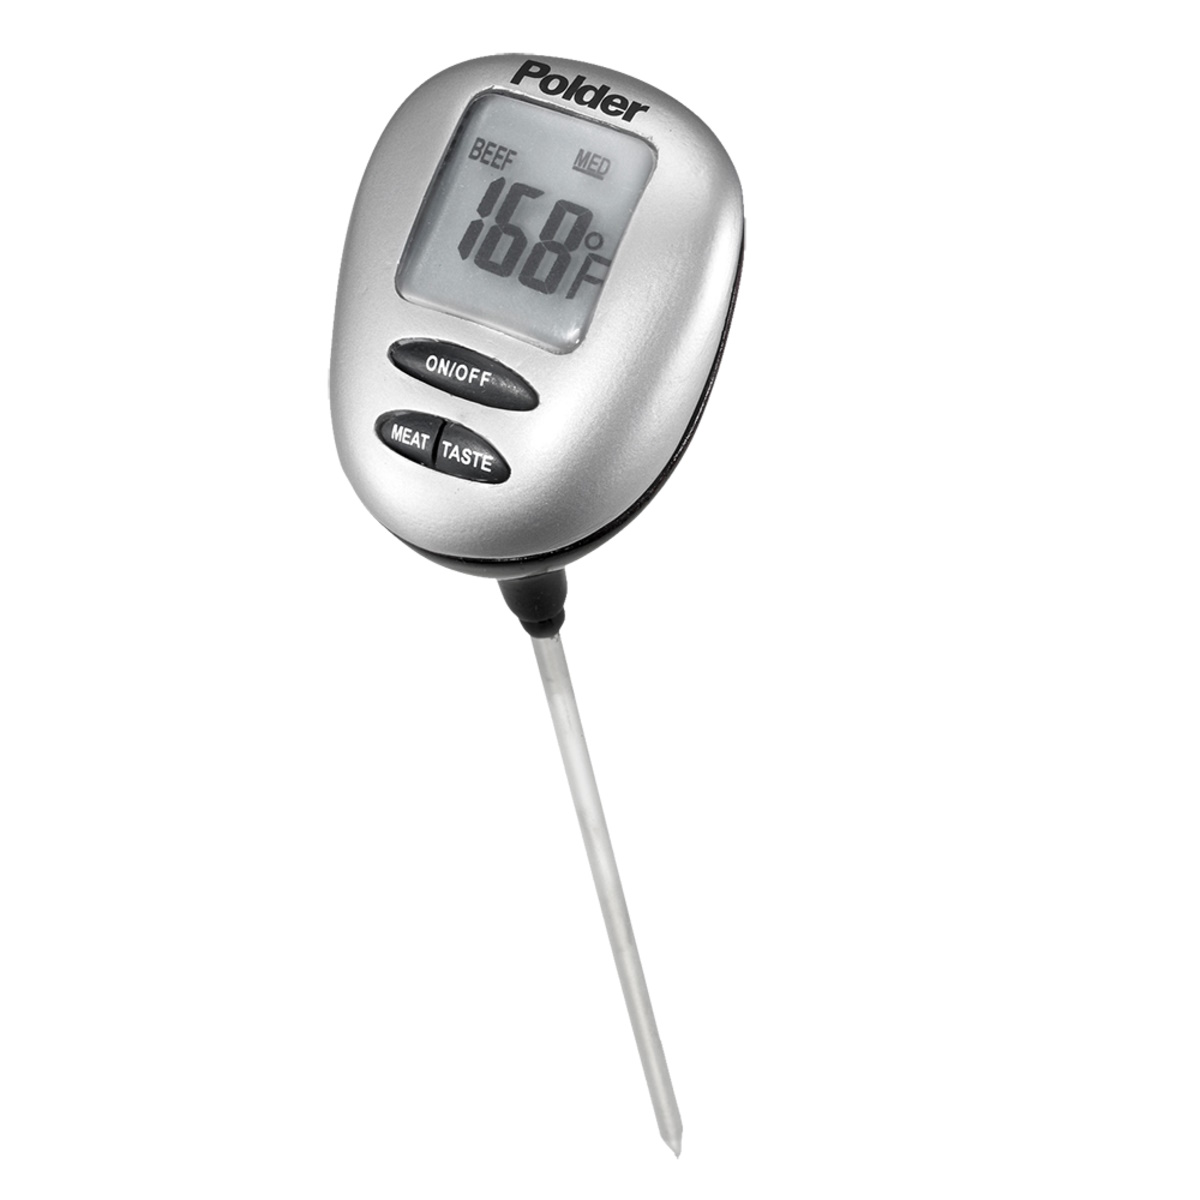 Polder Safe-serve Instant Read Thermometer